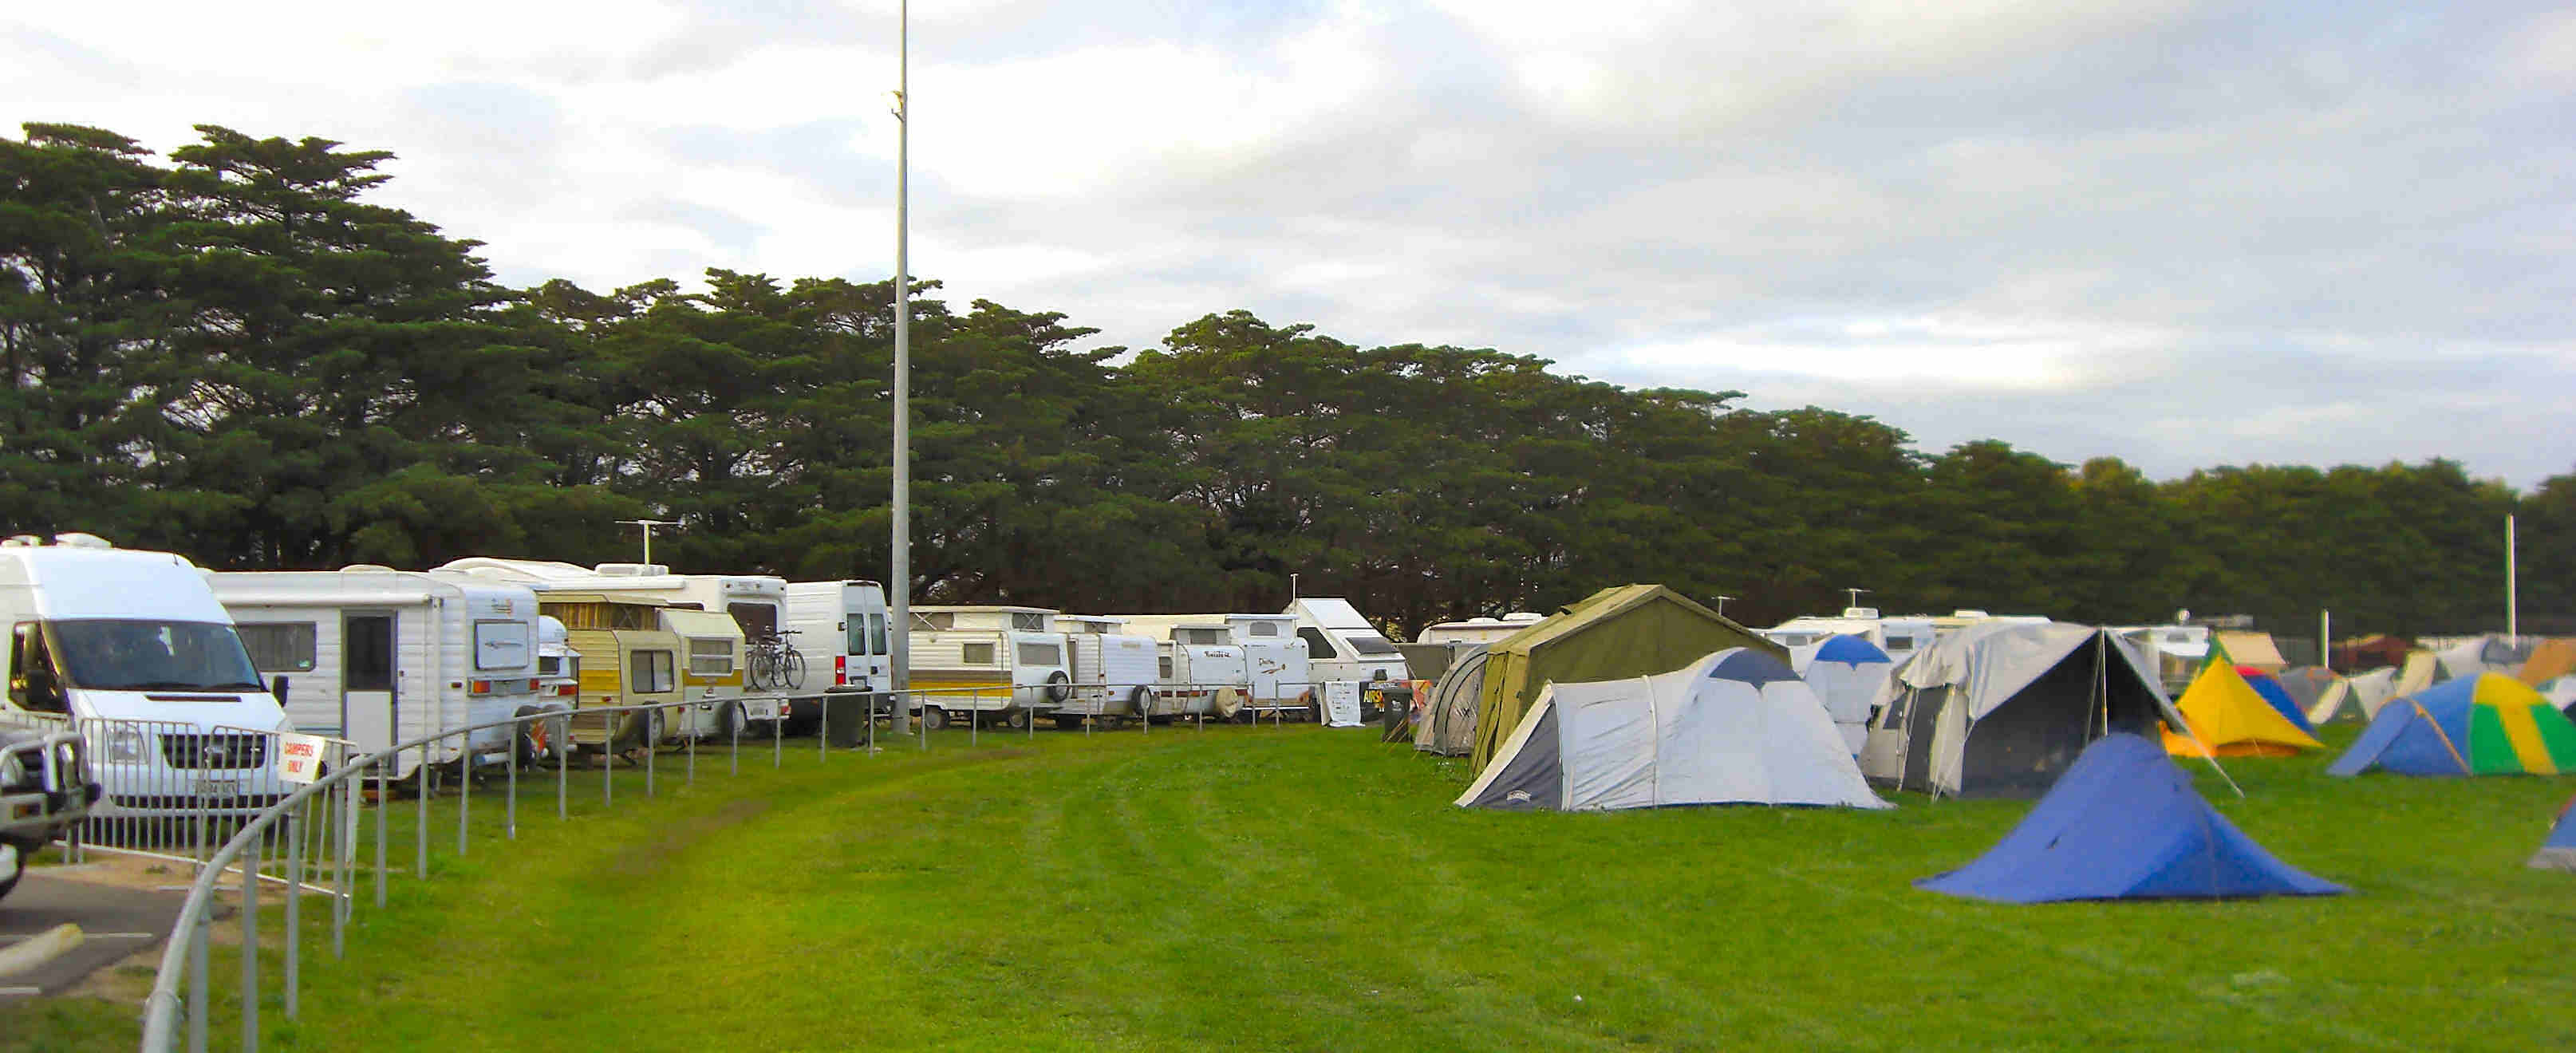 Lara Camping ground